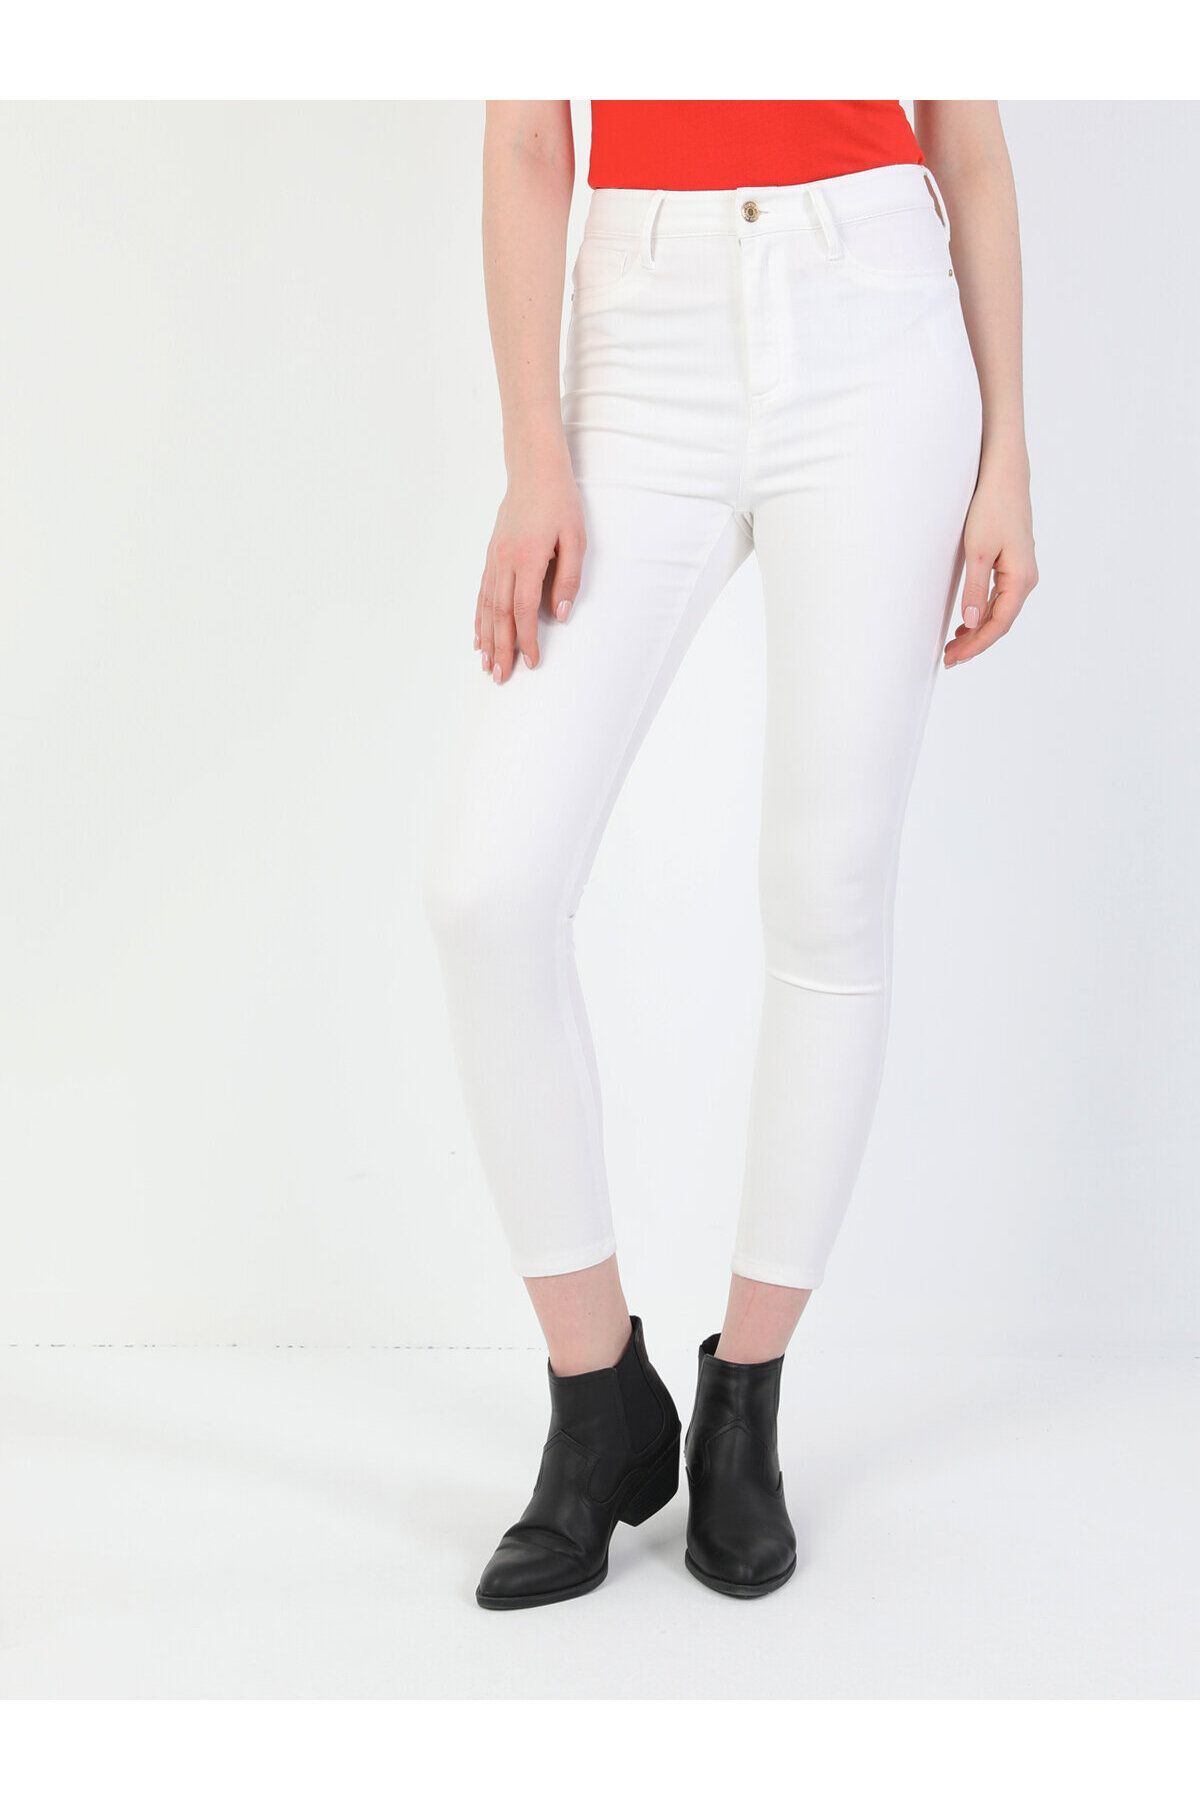 Colin’s Super Slim Fit Yüksek Bel Skinny Leg Kadın Beyaz Pantolon Cl1047989